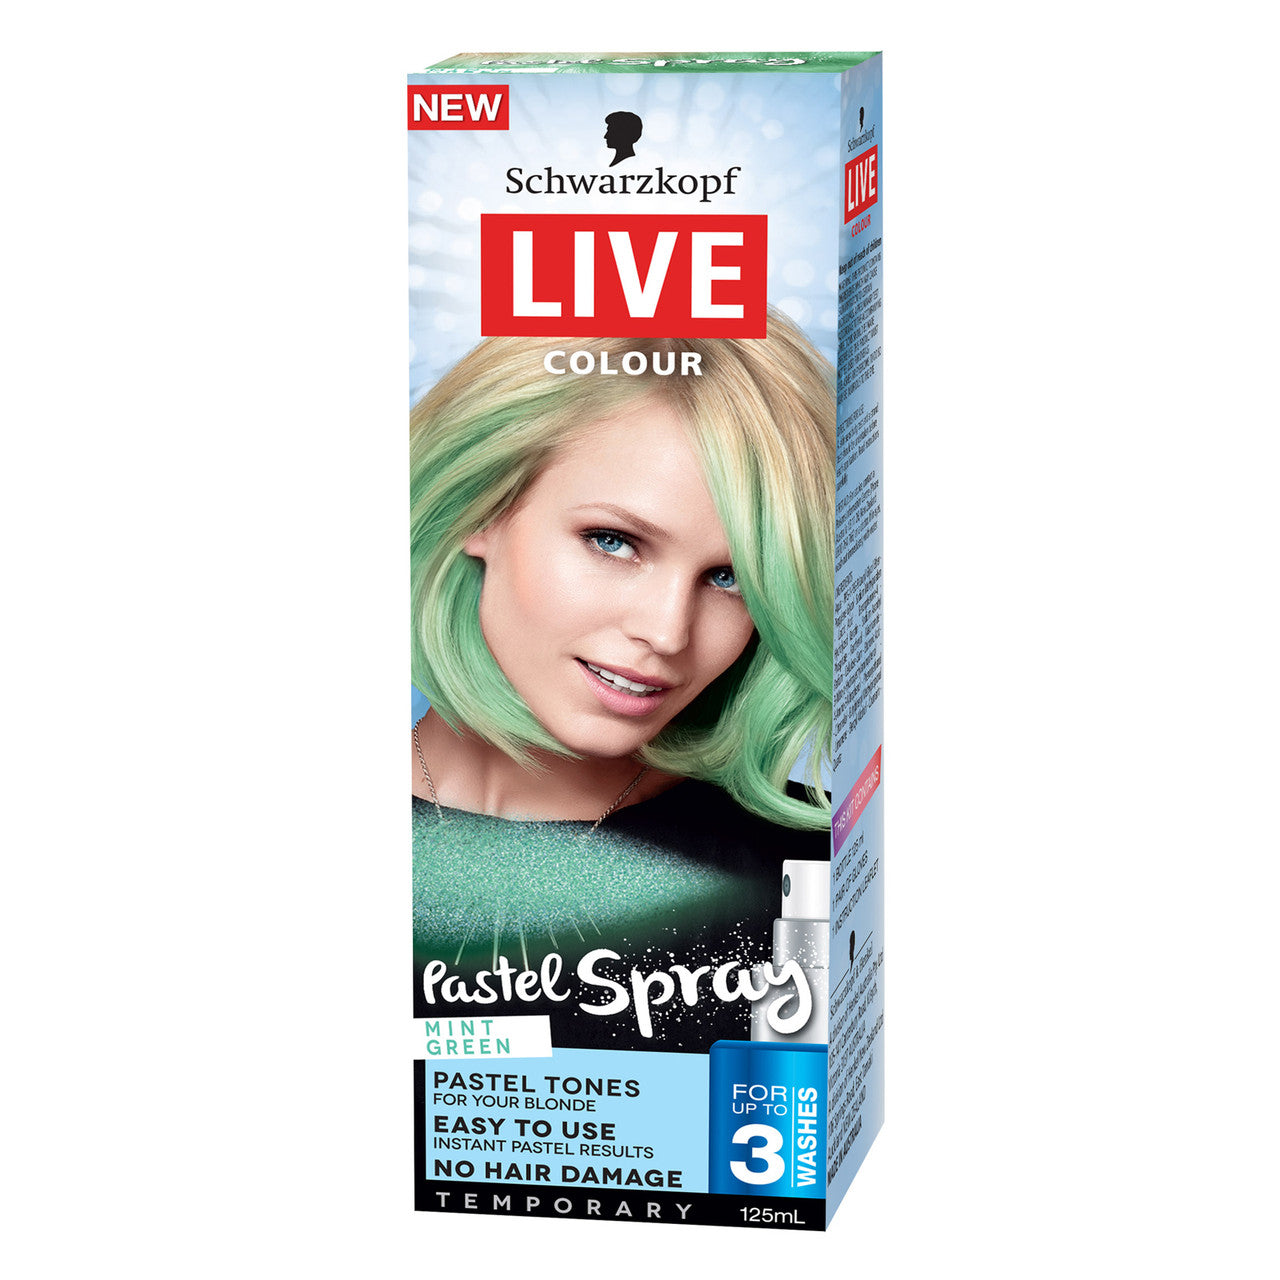 Schwarzkopf Live Colour Pastel Spray 125ml Pastel Mint Green Hair Dye - Homeware Discounts